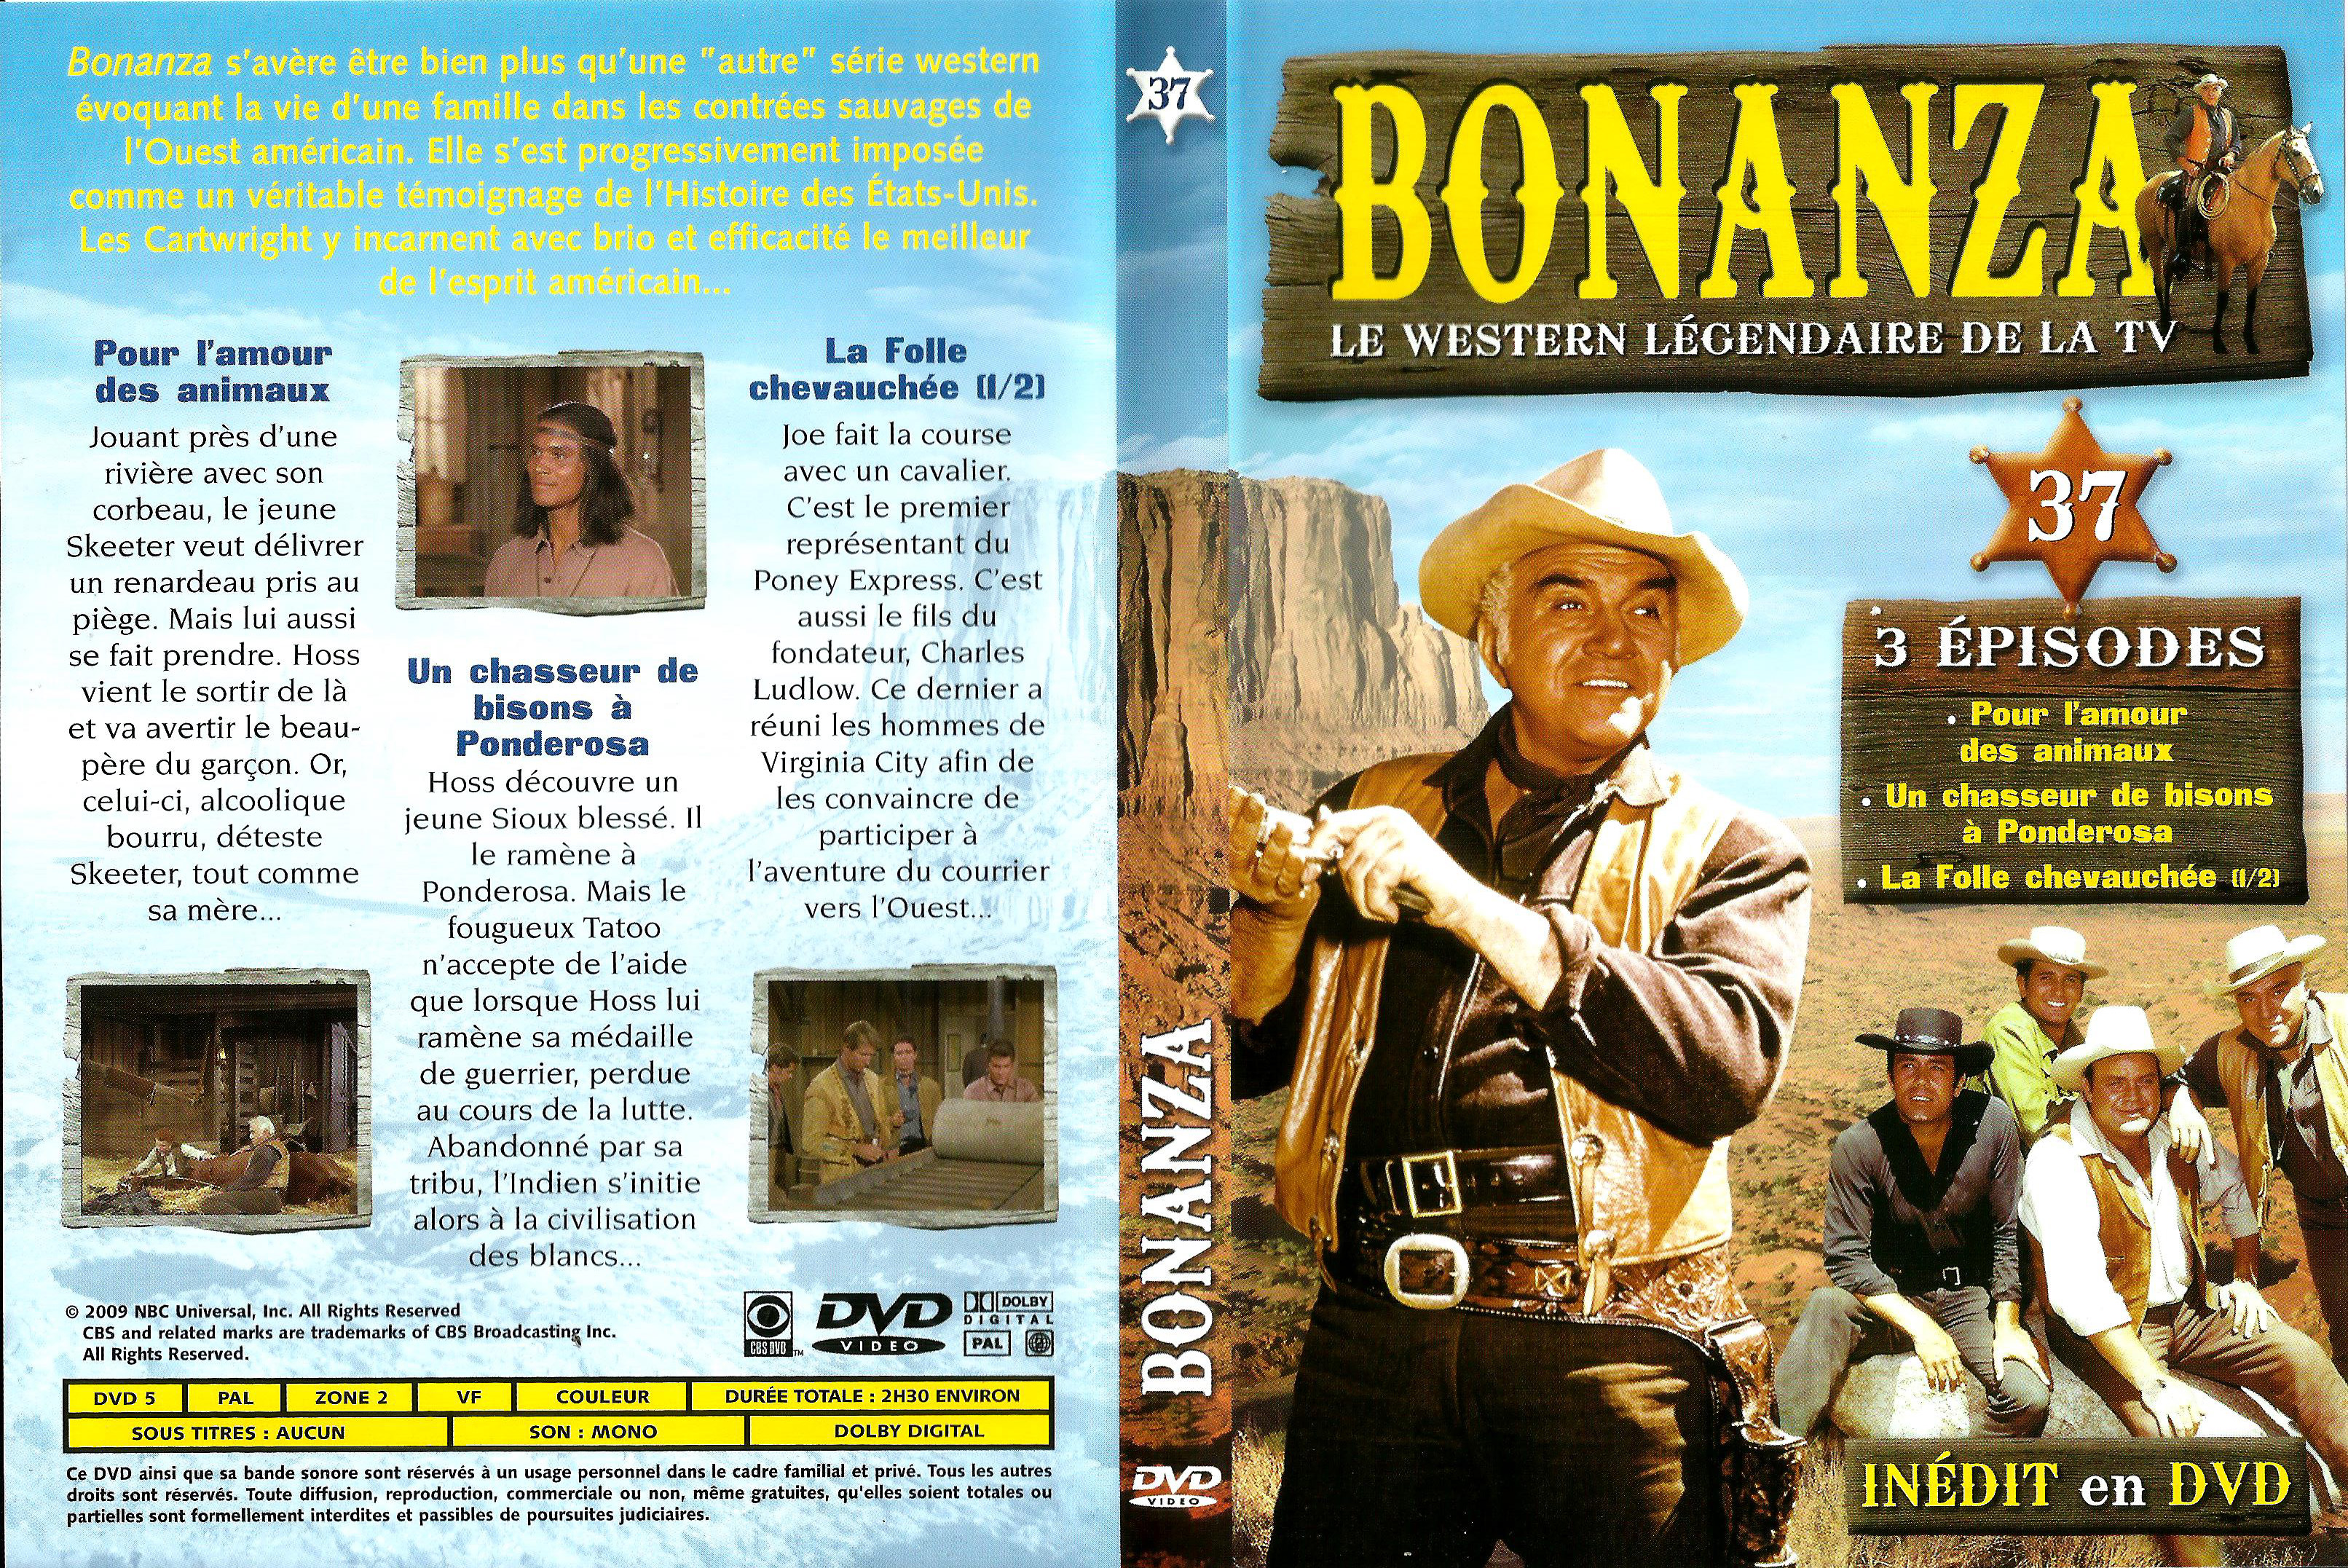 Jaquette DVD Bonanza vol 37